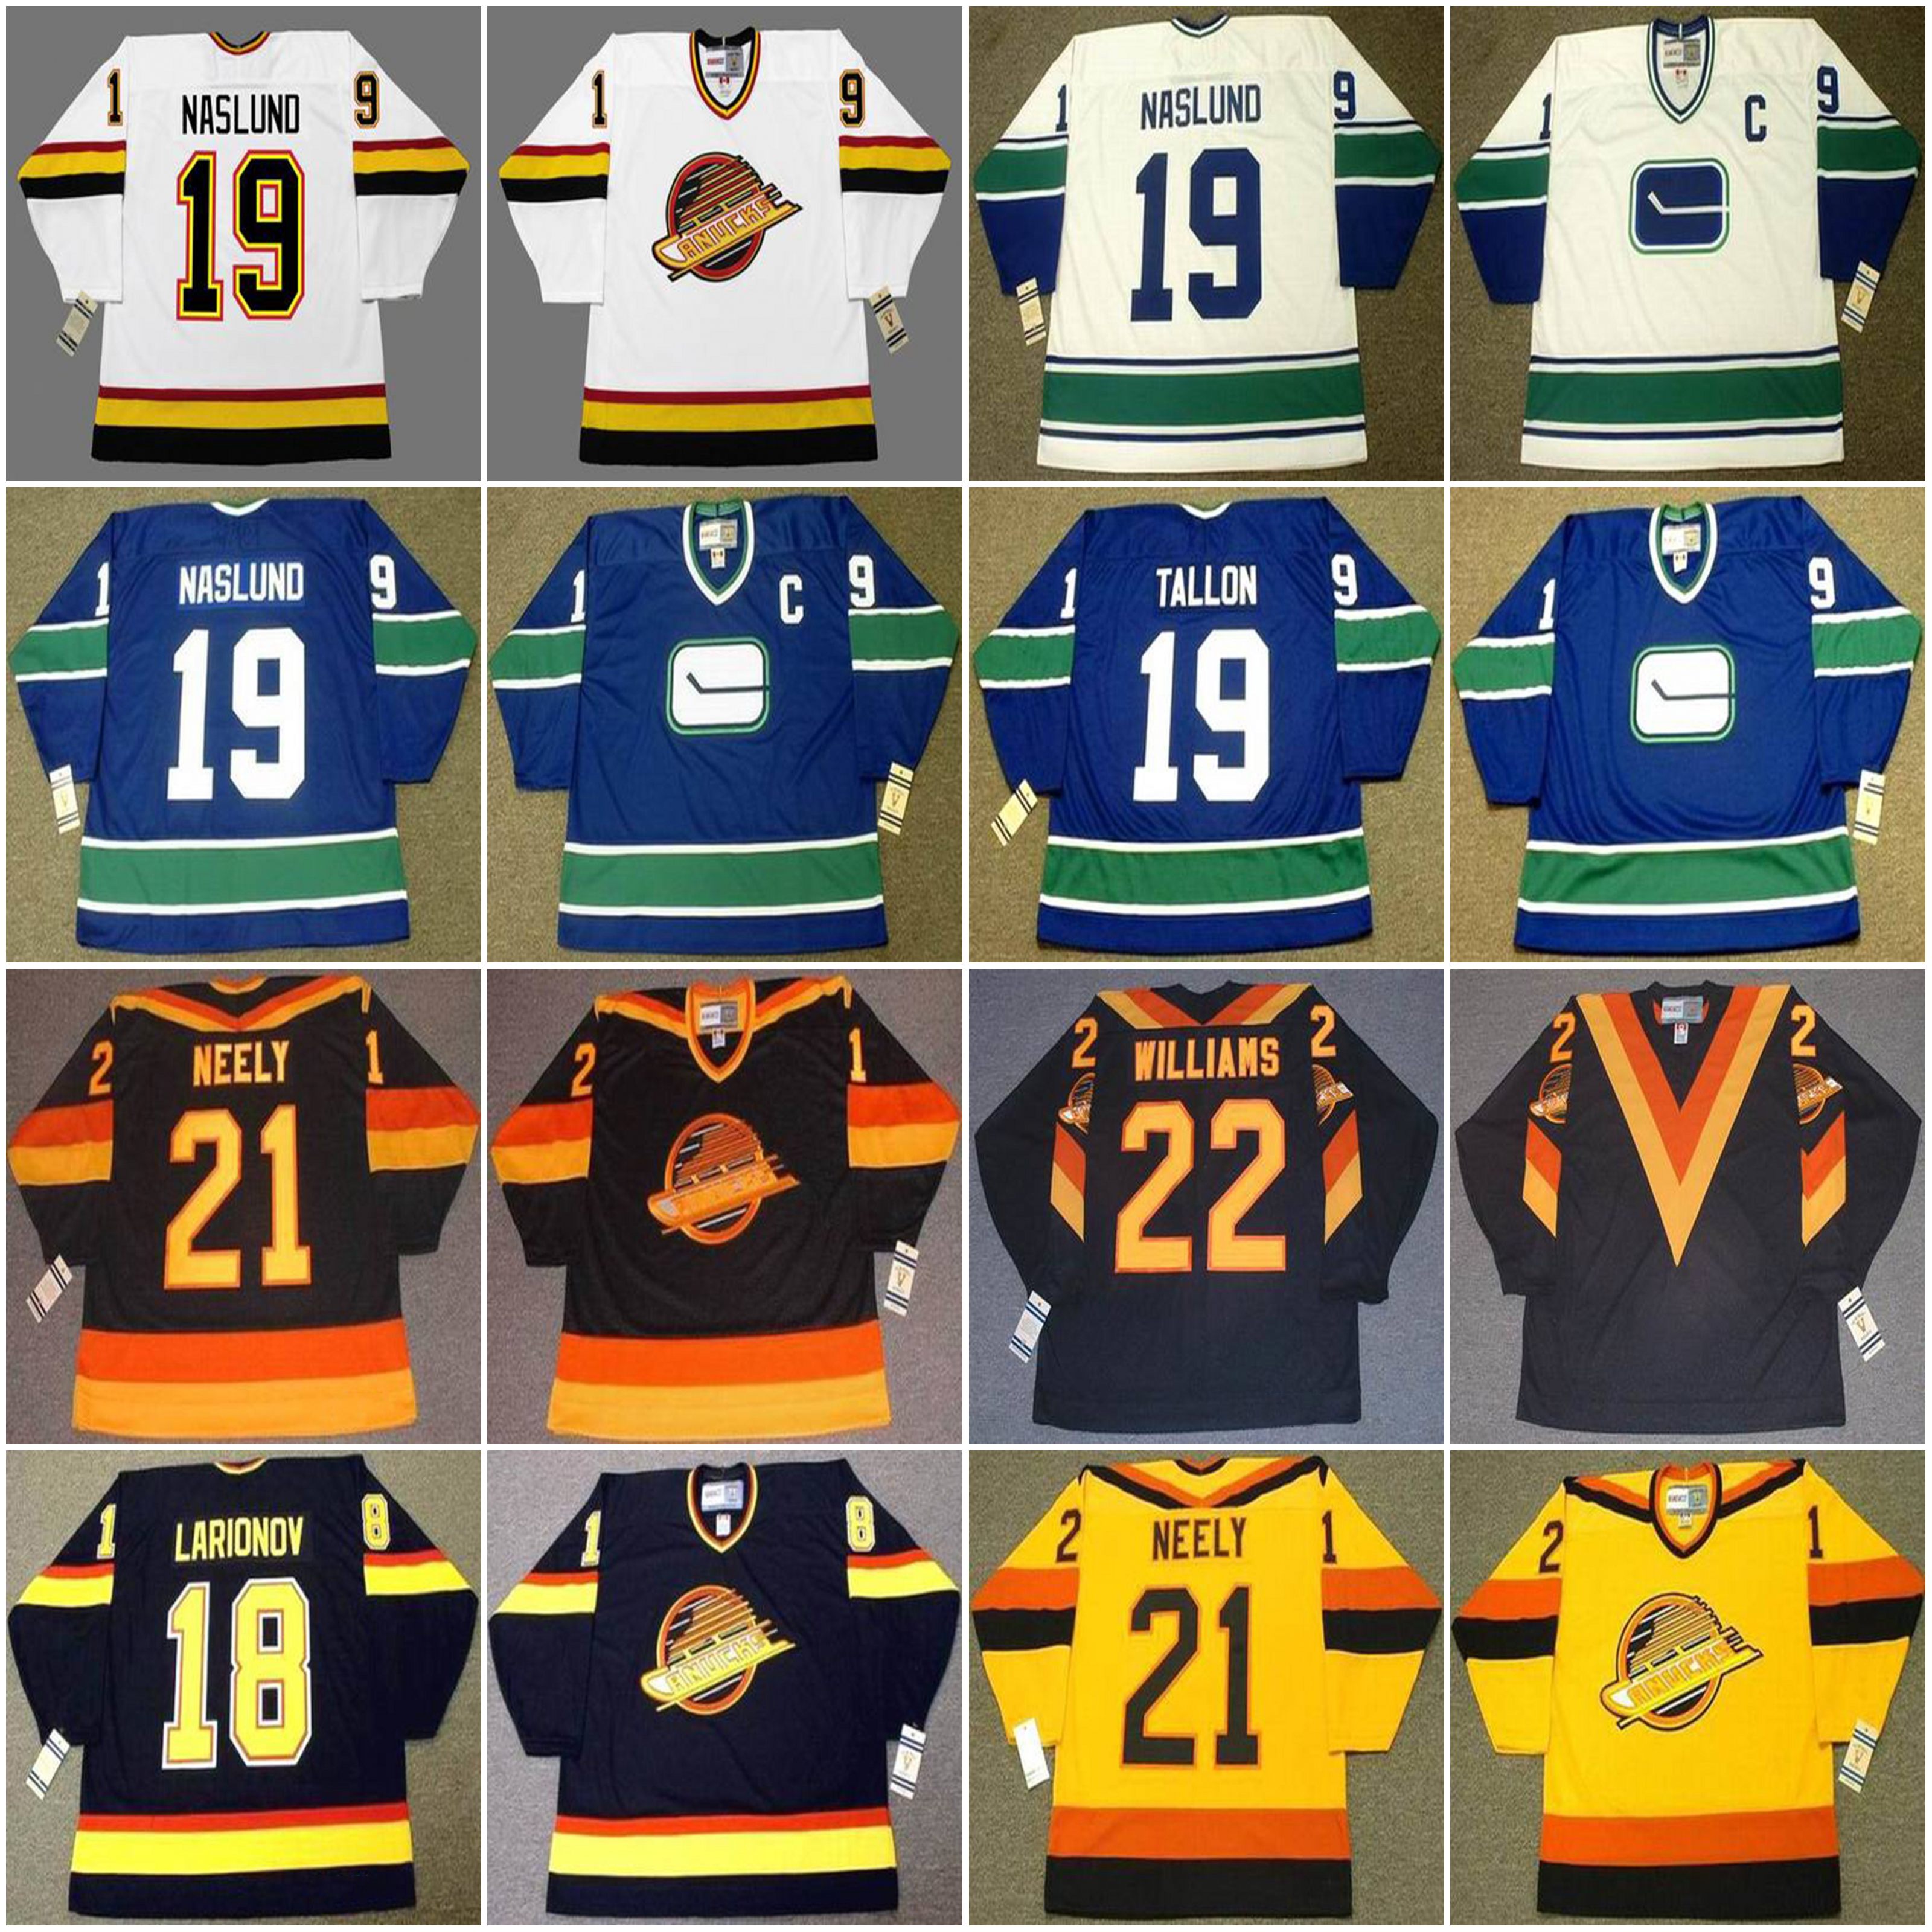 

Vancouver Canucks Vintage Hockey Jersey 18 IGOR LARIONOV 1991 TALLON NASLUND KESLER 21 CAM NEELY 1983 LUMME 22 DANIEL SEDIN 1970's TIGER WILLIAMS, White 19 markus naslund 1996